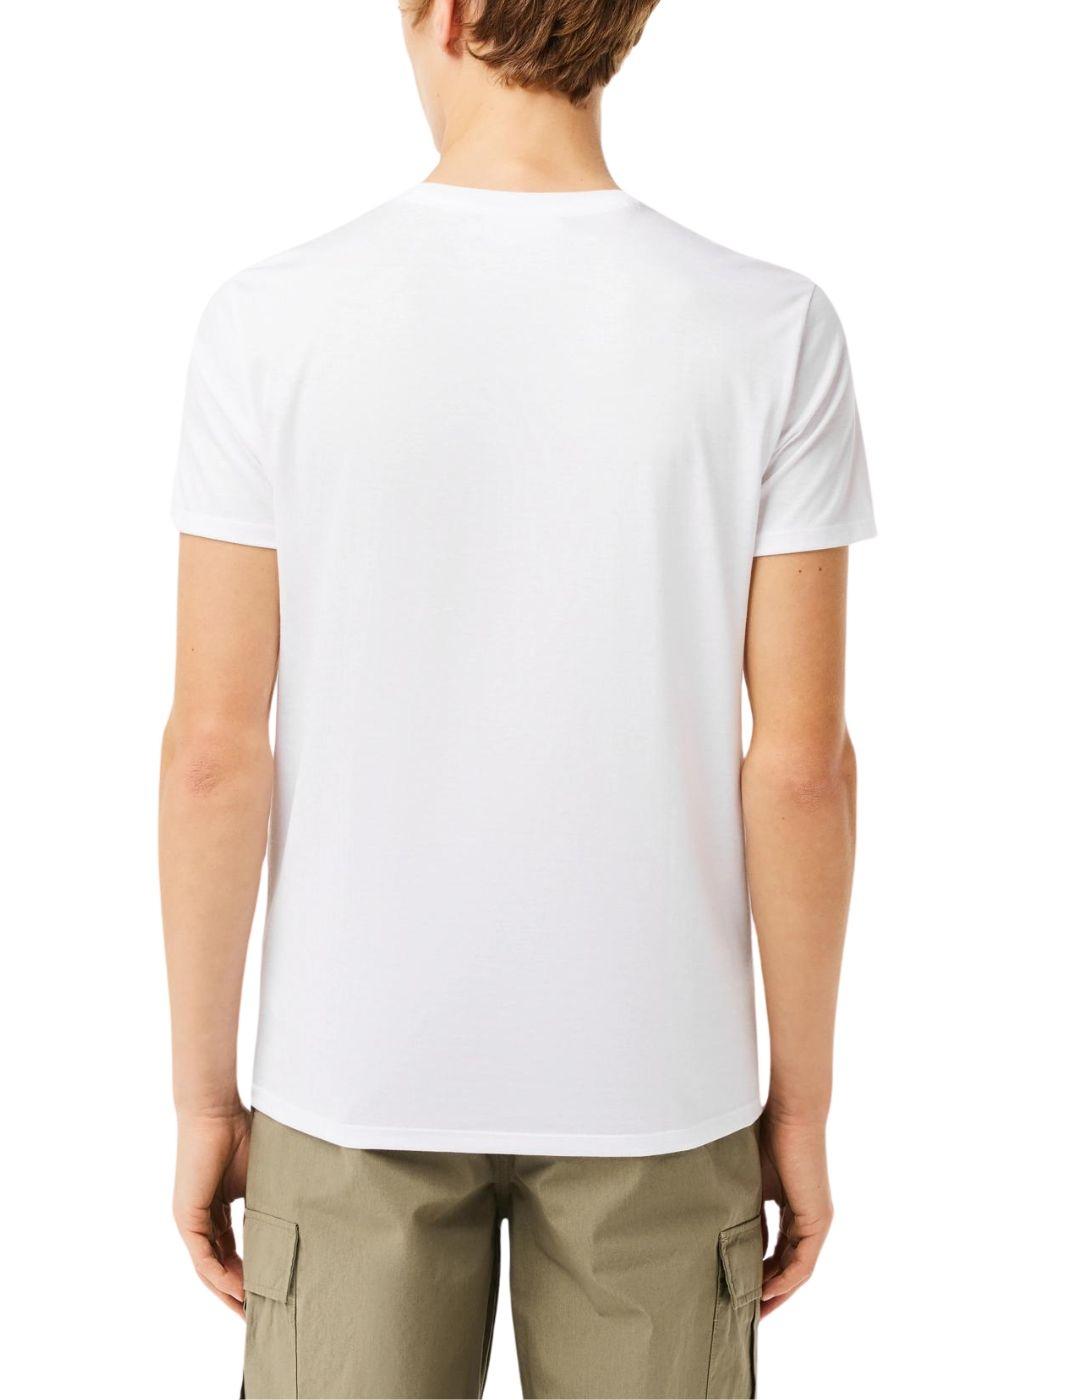 Camiseta Lacoste básica de manga corta de hombre pima cotton